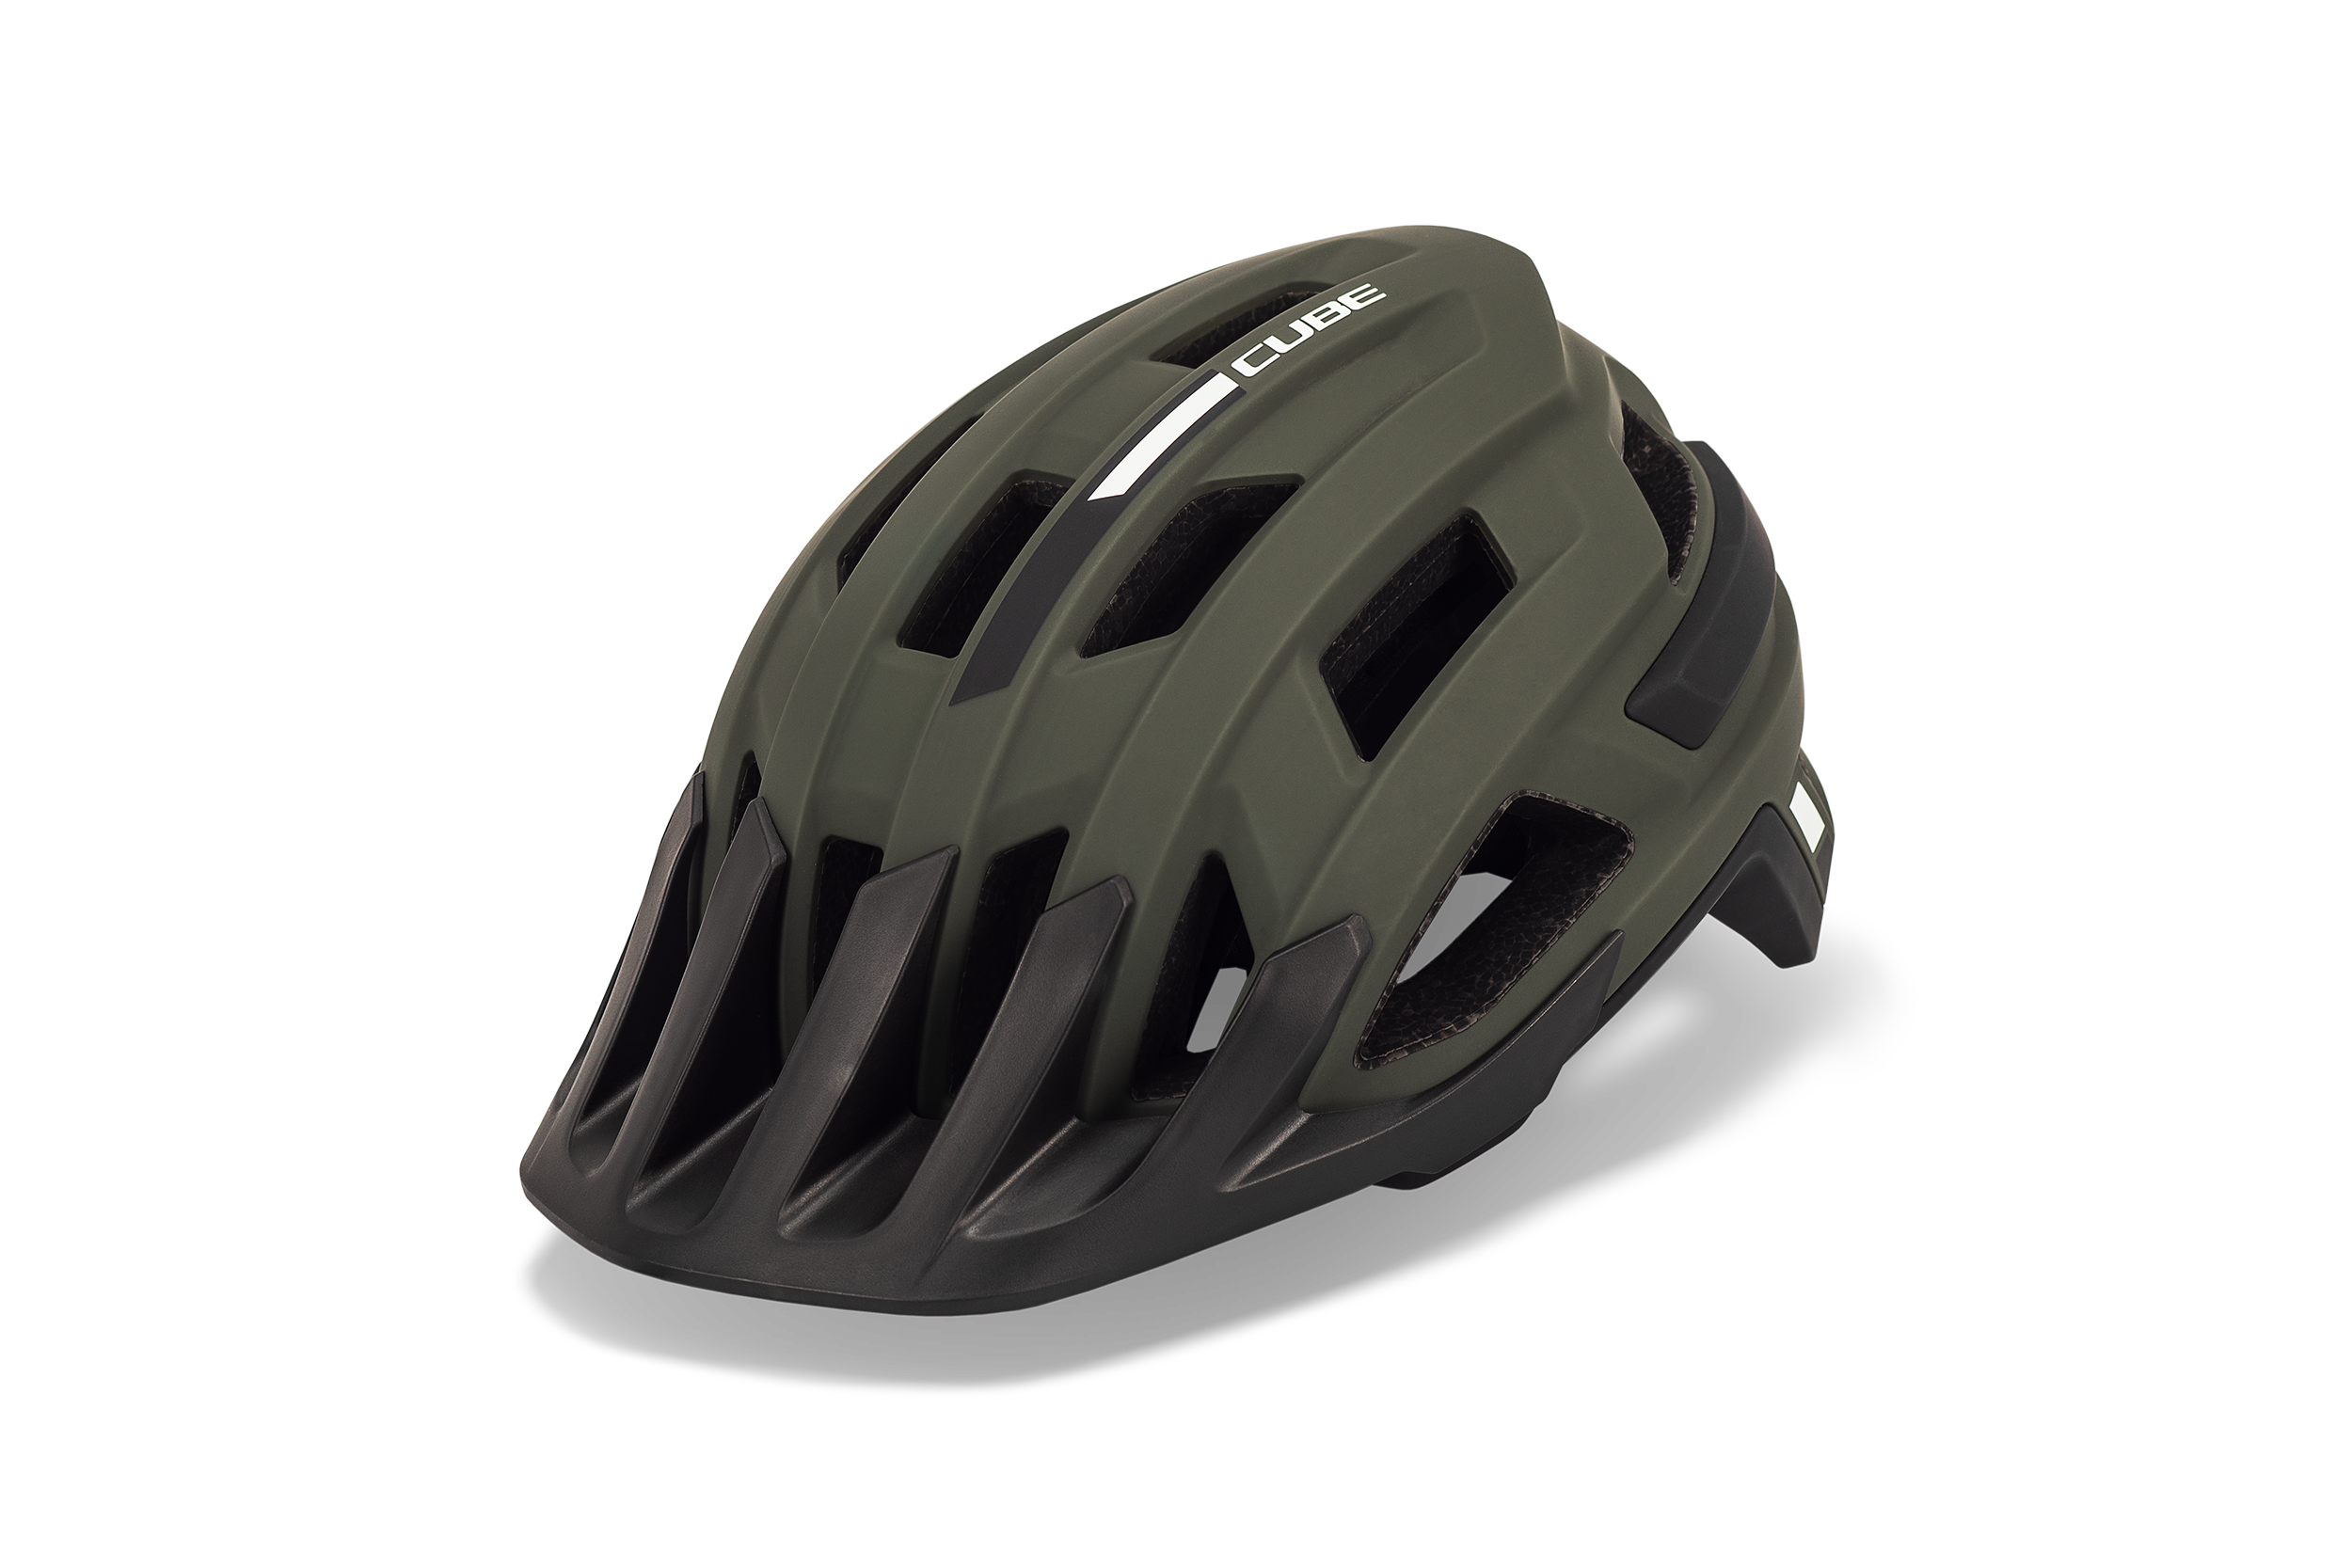 CUBE Helmet ROOK